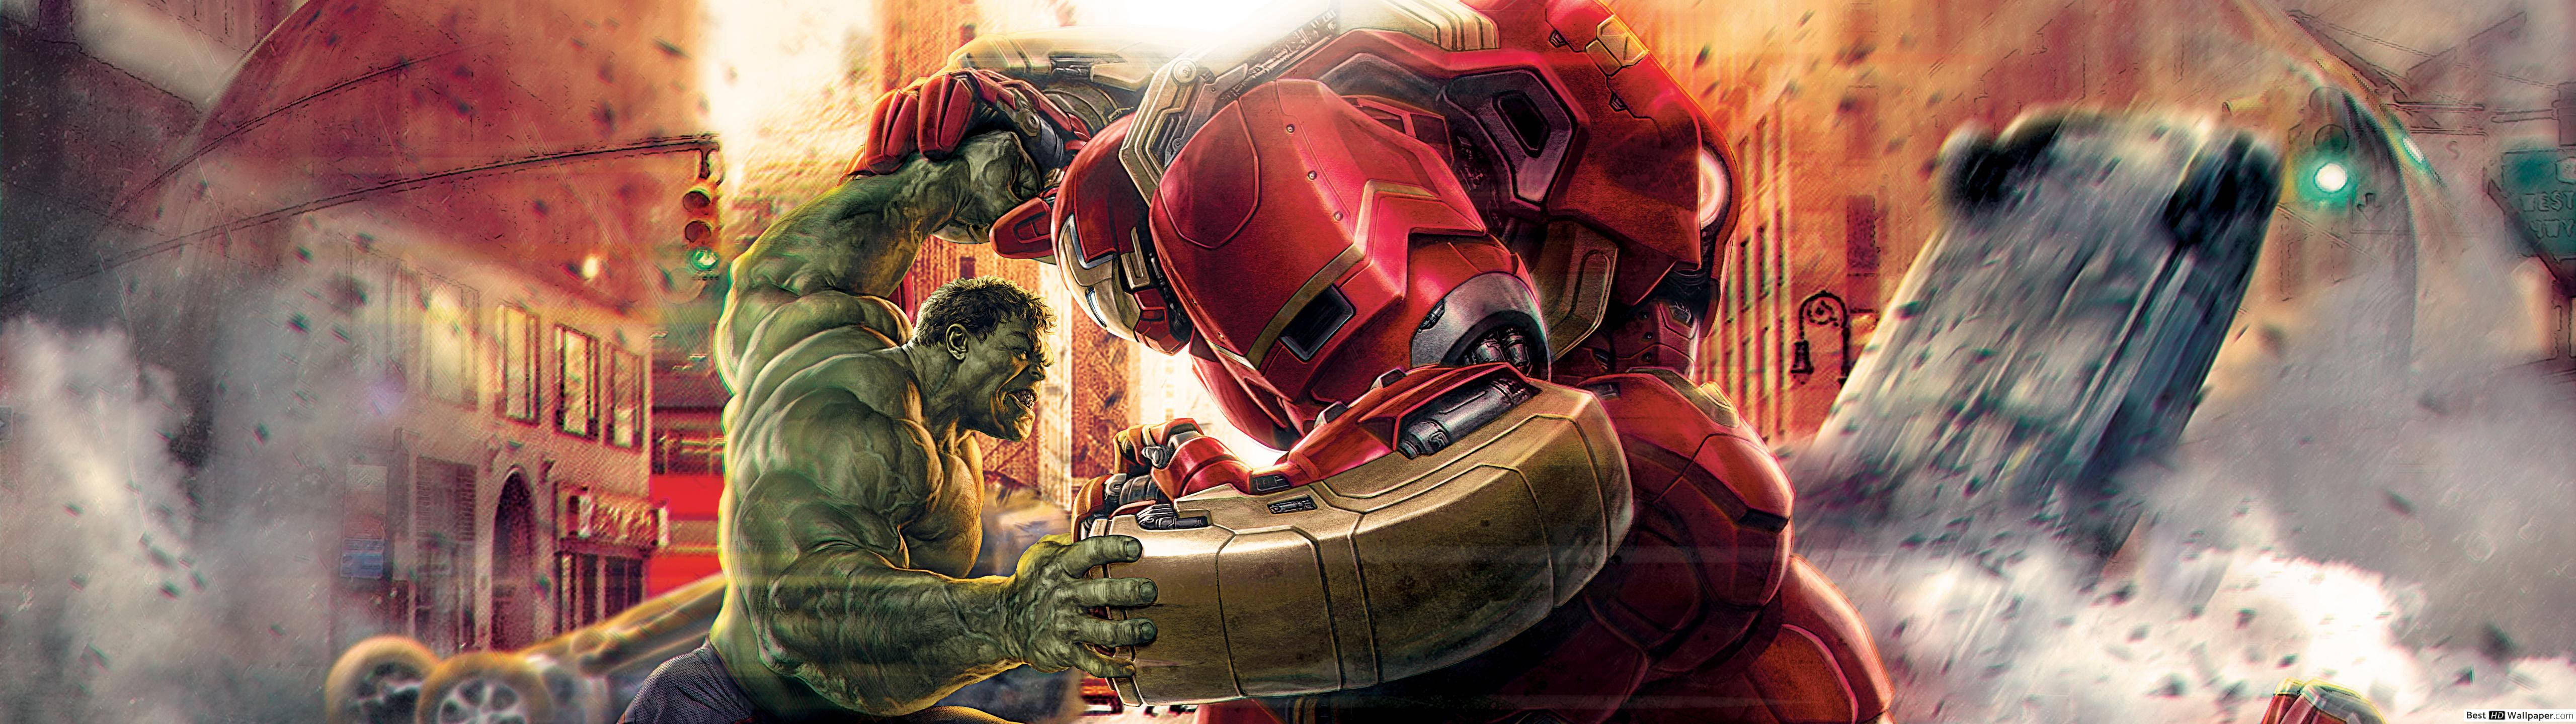 Marvel's Ironman Vs Hulk 5120 X 1440 Wallpaper